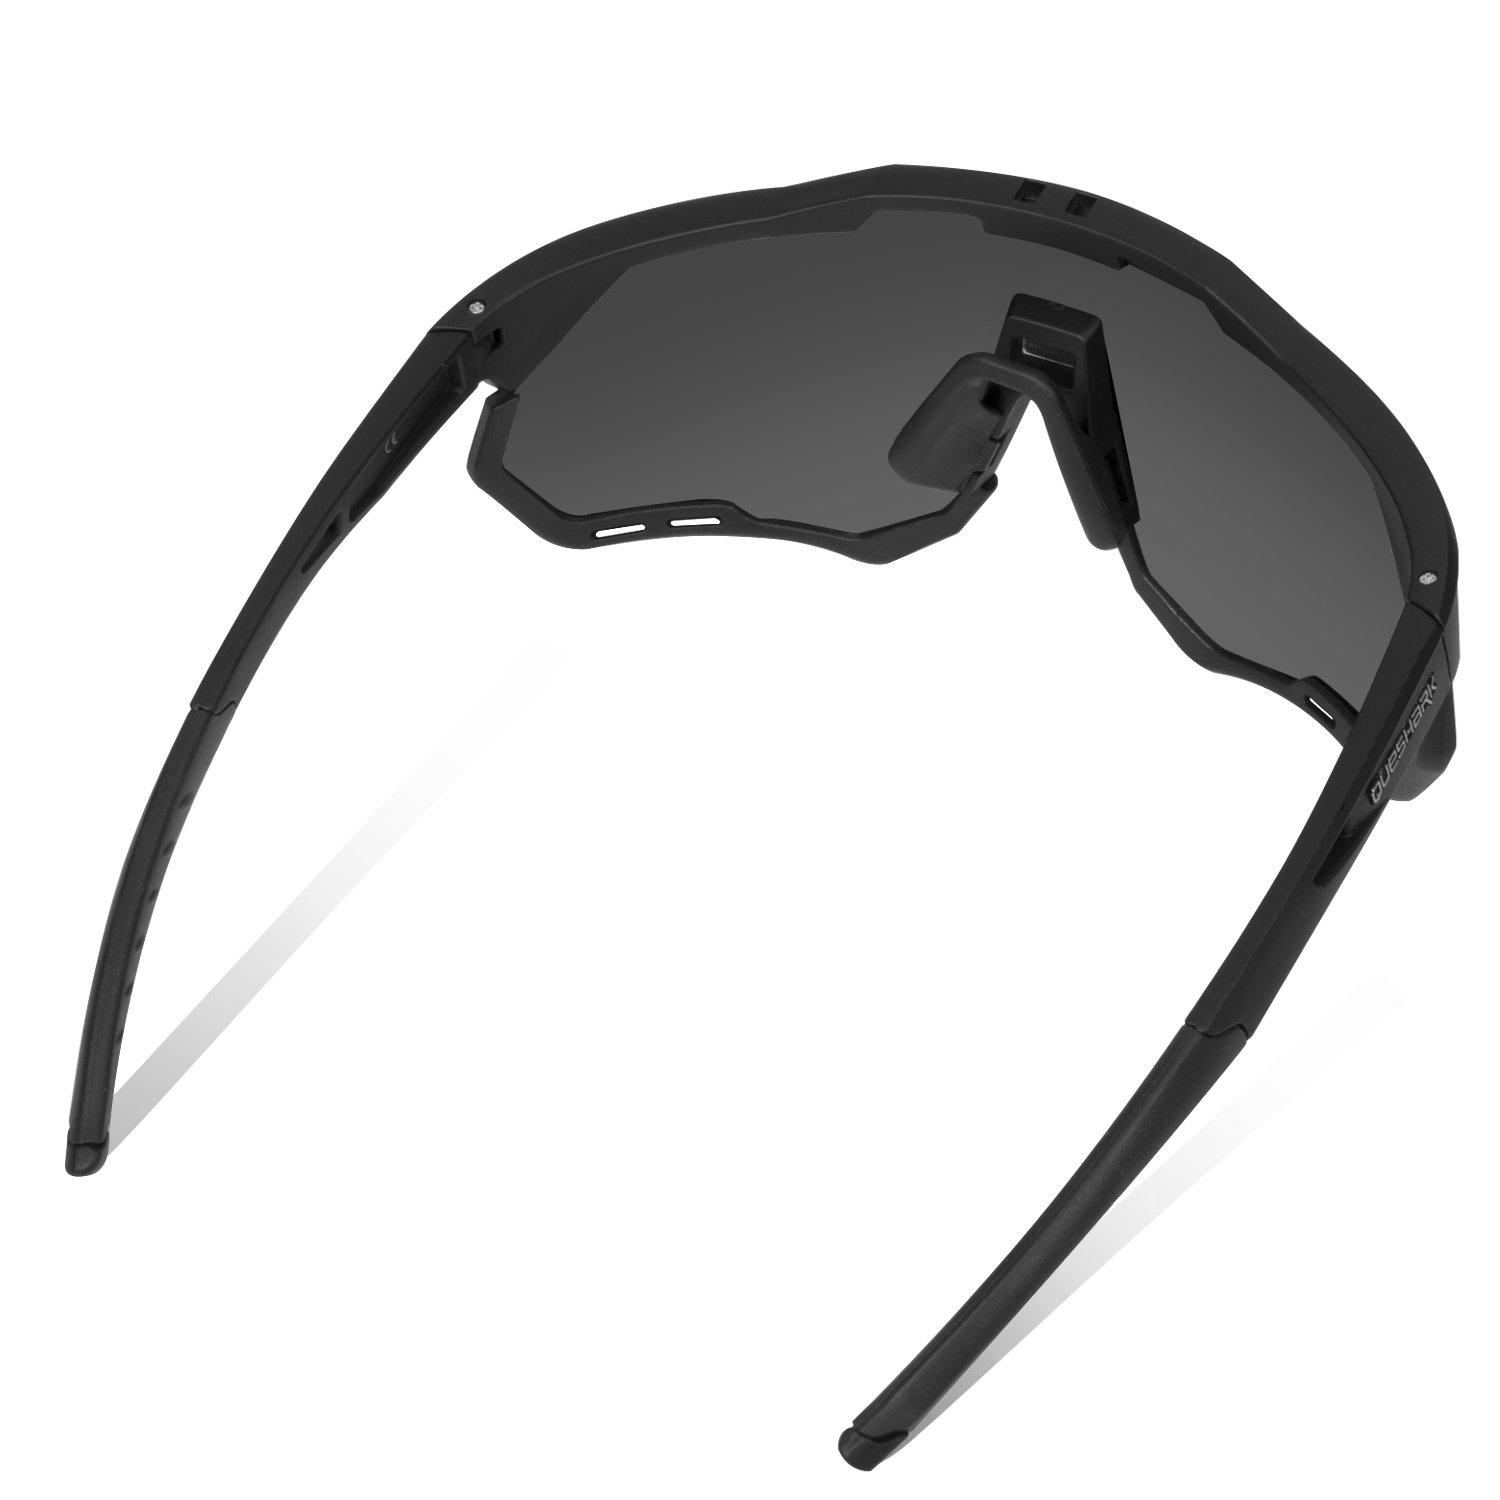 Queshark Polarized Cycling Glasses Men Women Sport Sunglasses with